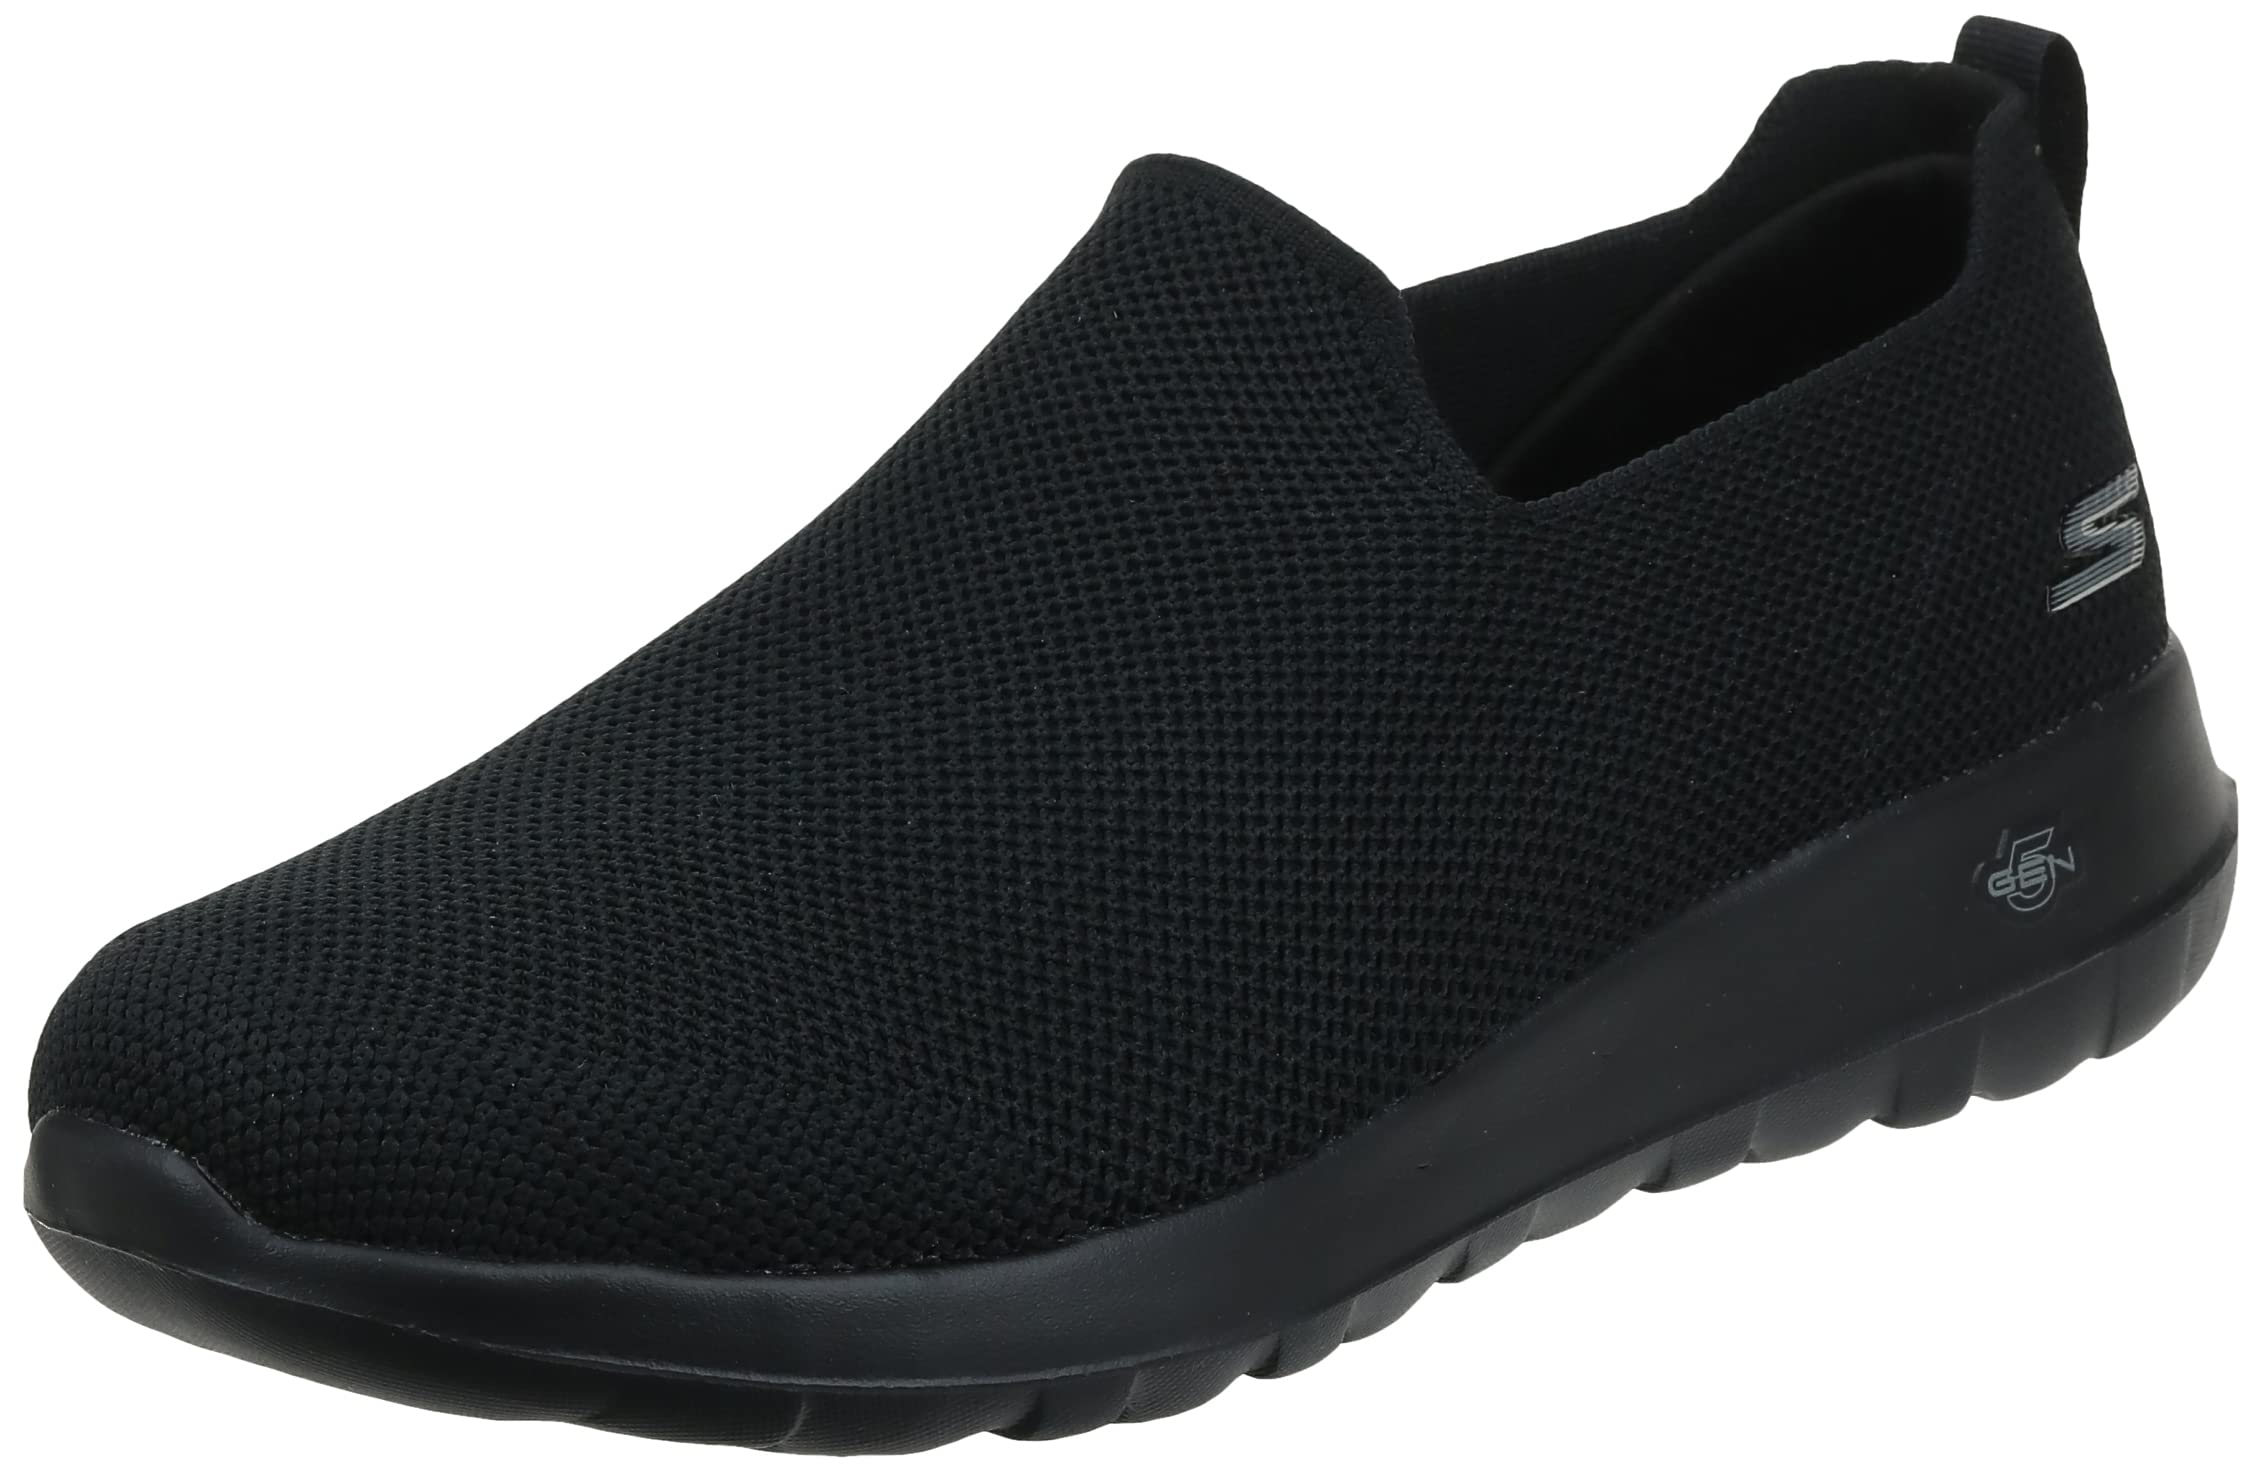 Skechers Men's Go Walk Max-Athletic Air Mesh Slip on Walkking Shoe Sneaker,Black/Black/Black,10.5 M US